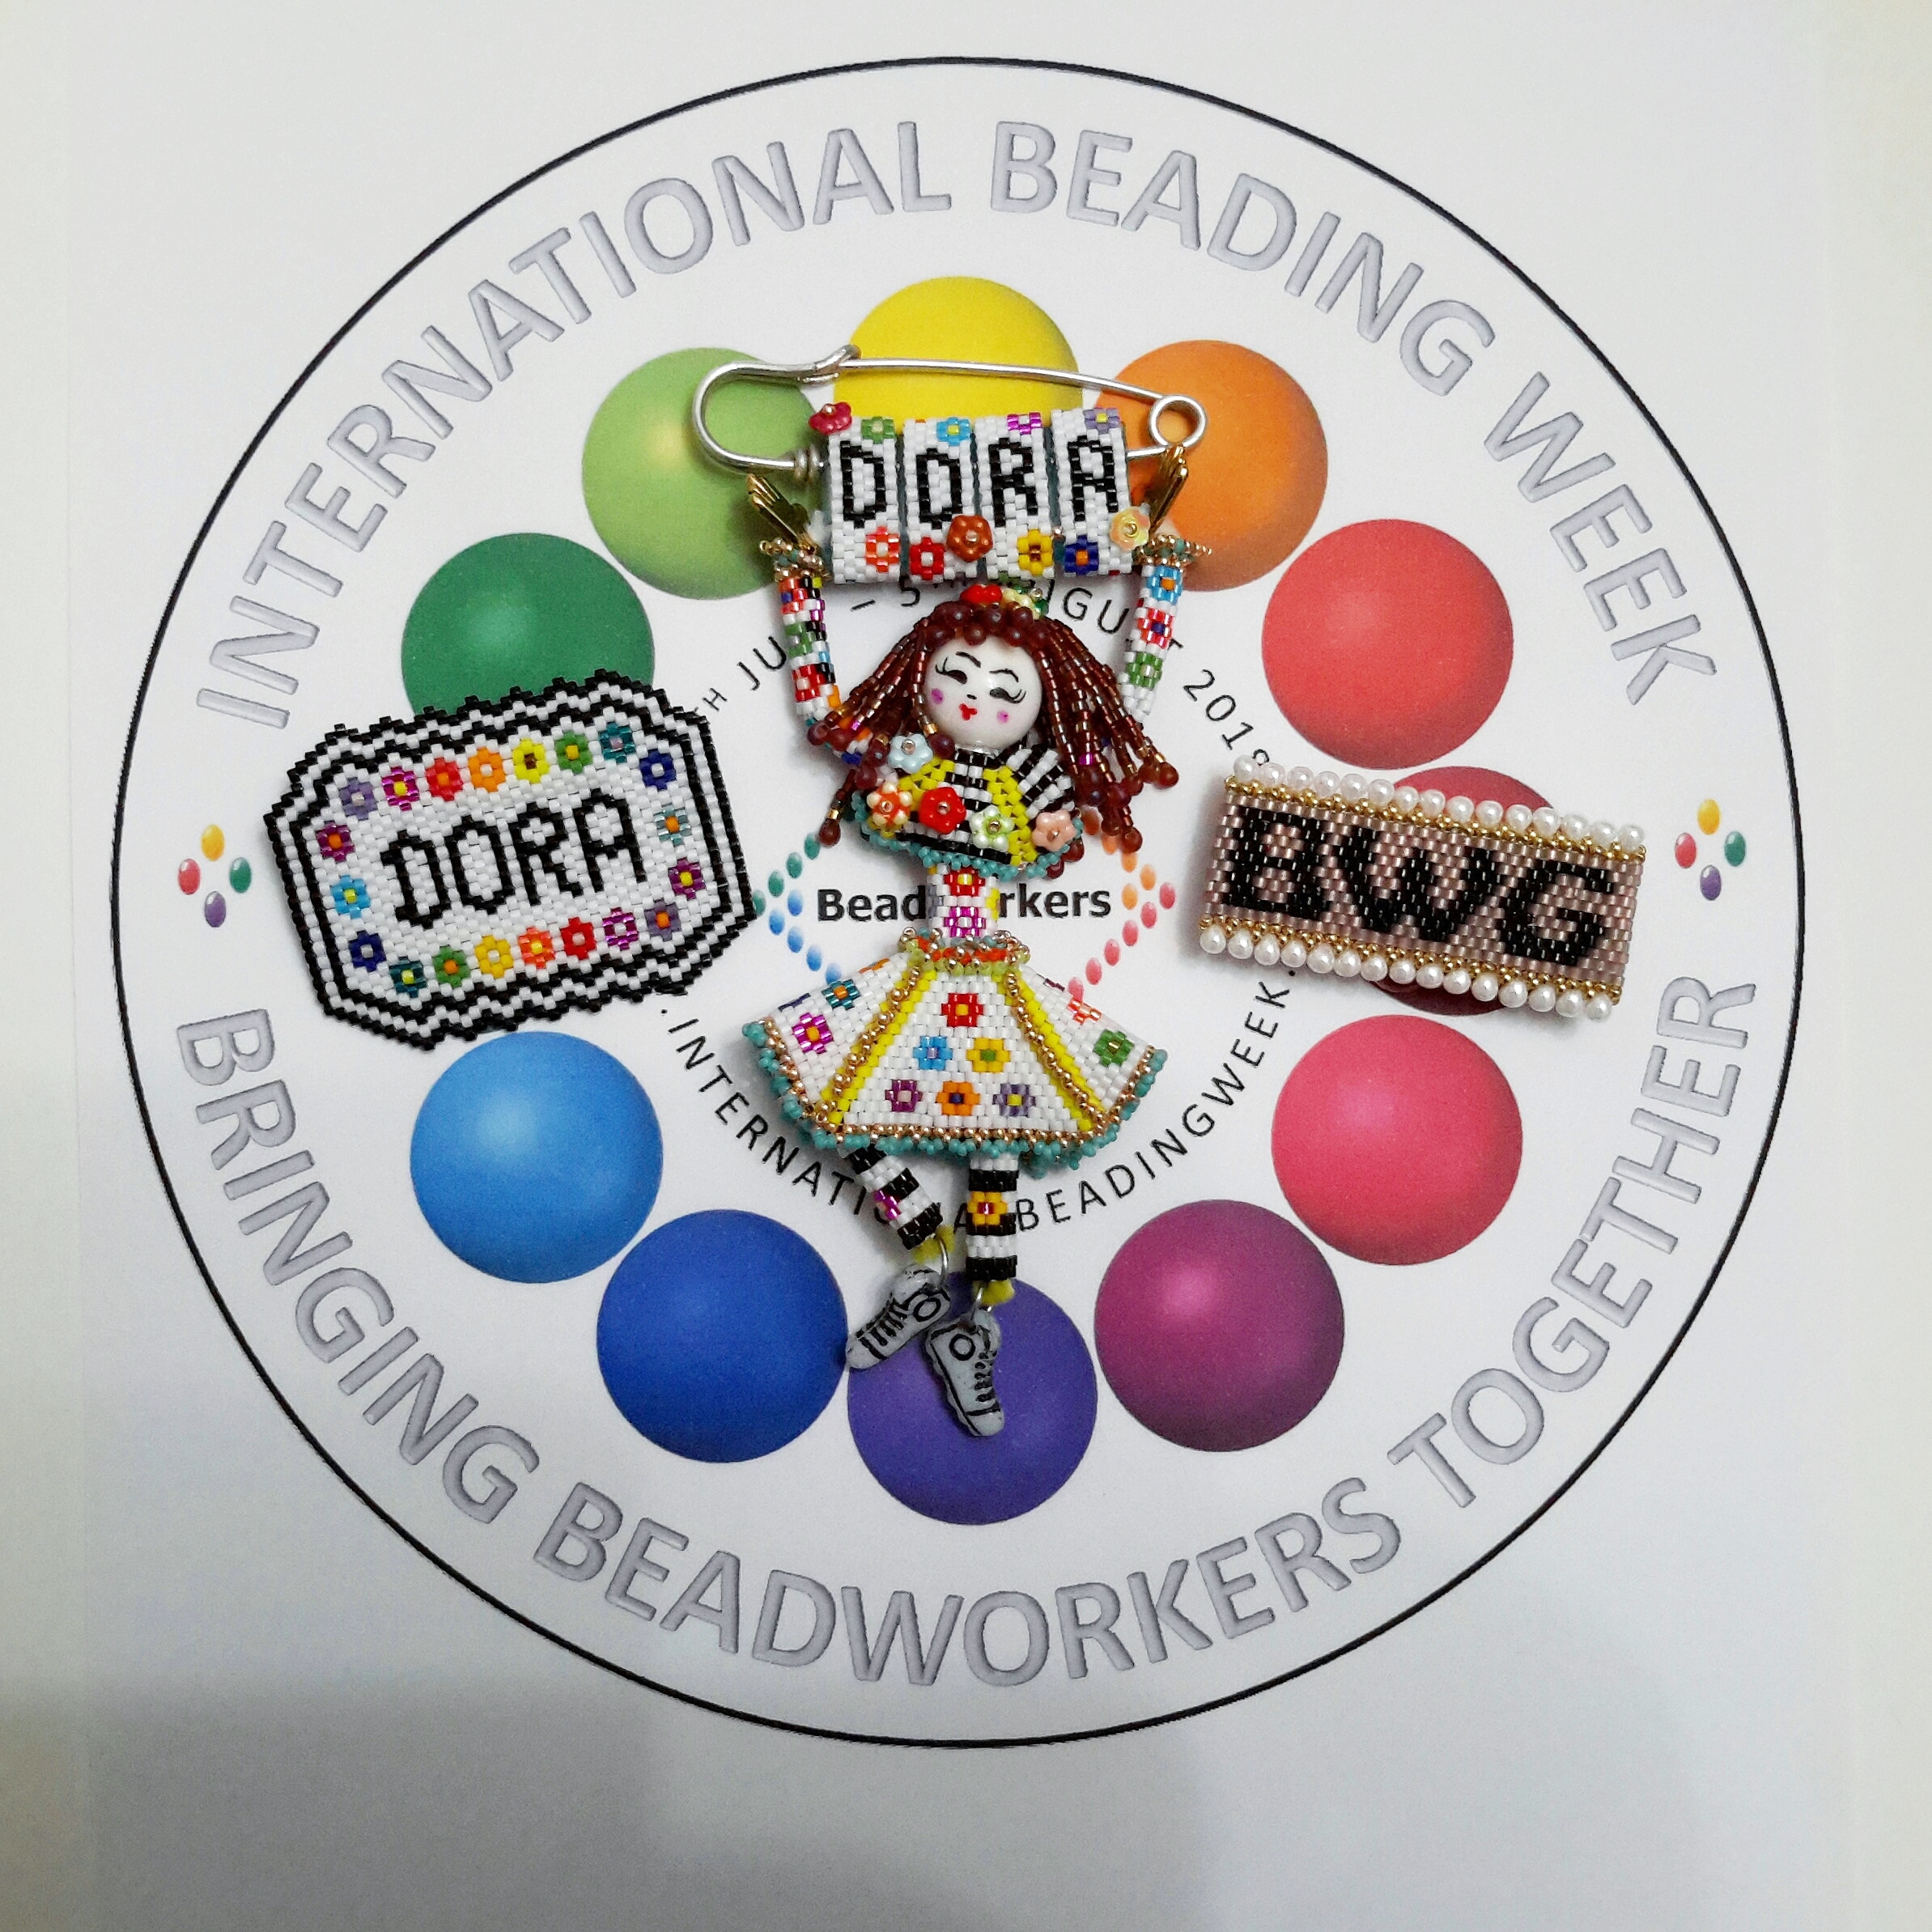 IBW 2019 Bead Inspirations contest entry by Dora, Beadflowers, beadwork by Katie Dean